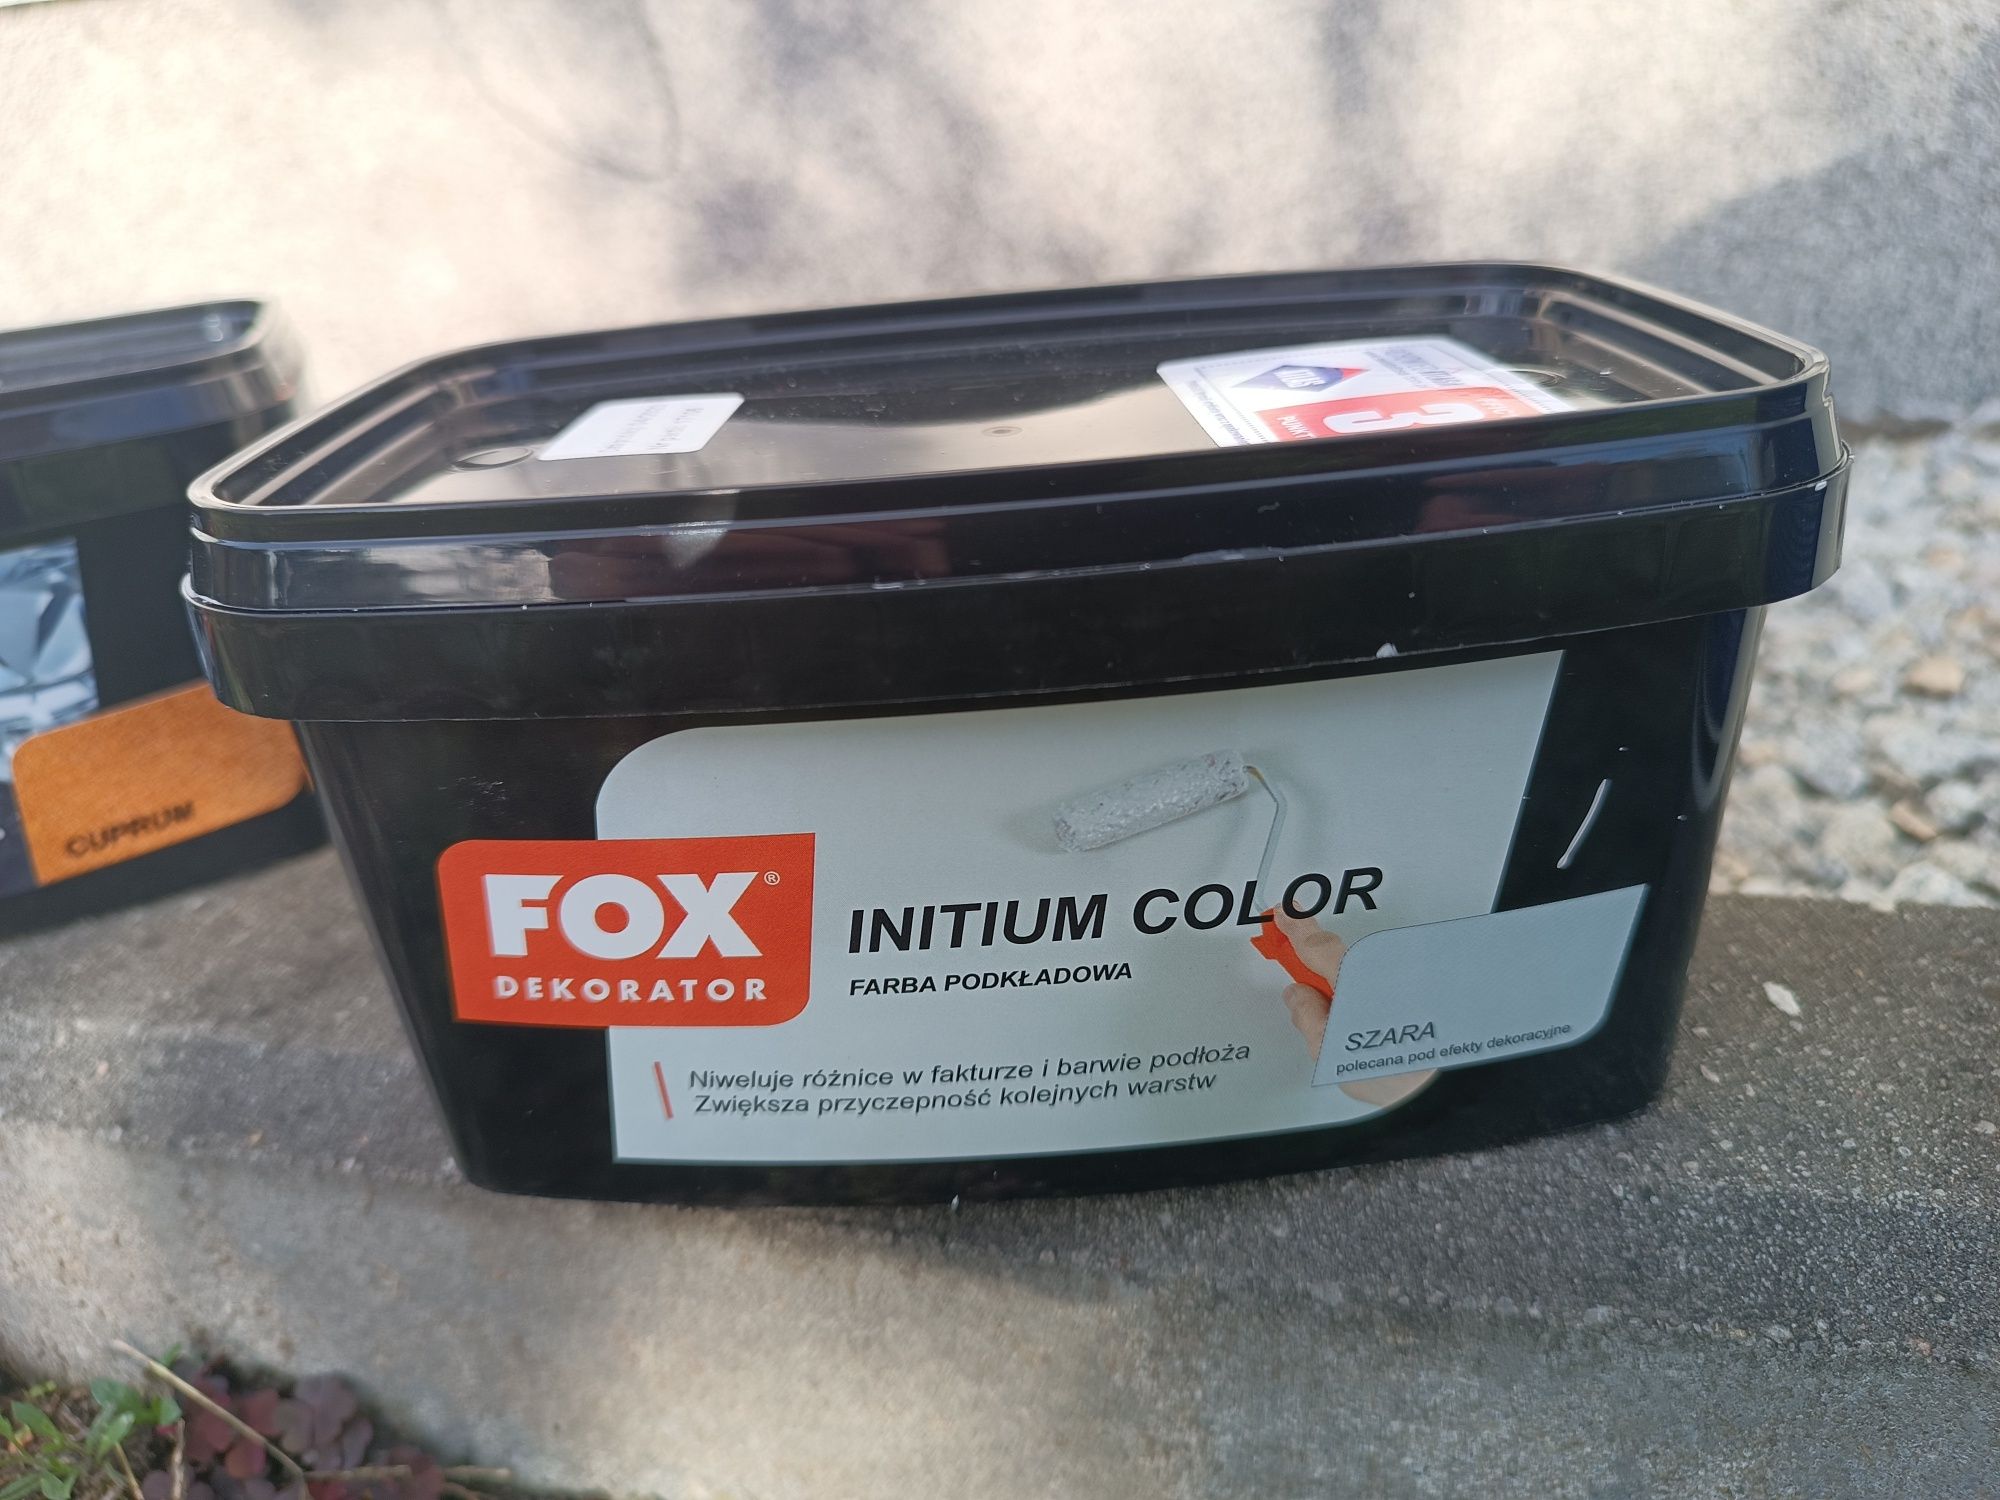 Fox Cuprum strukturalna + Initium szara farba podkładowa